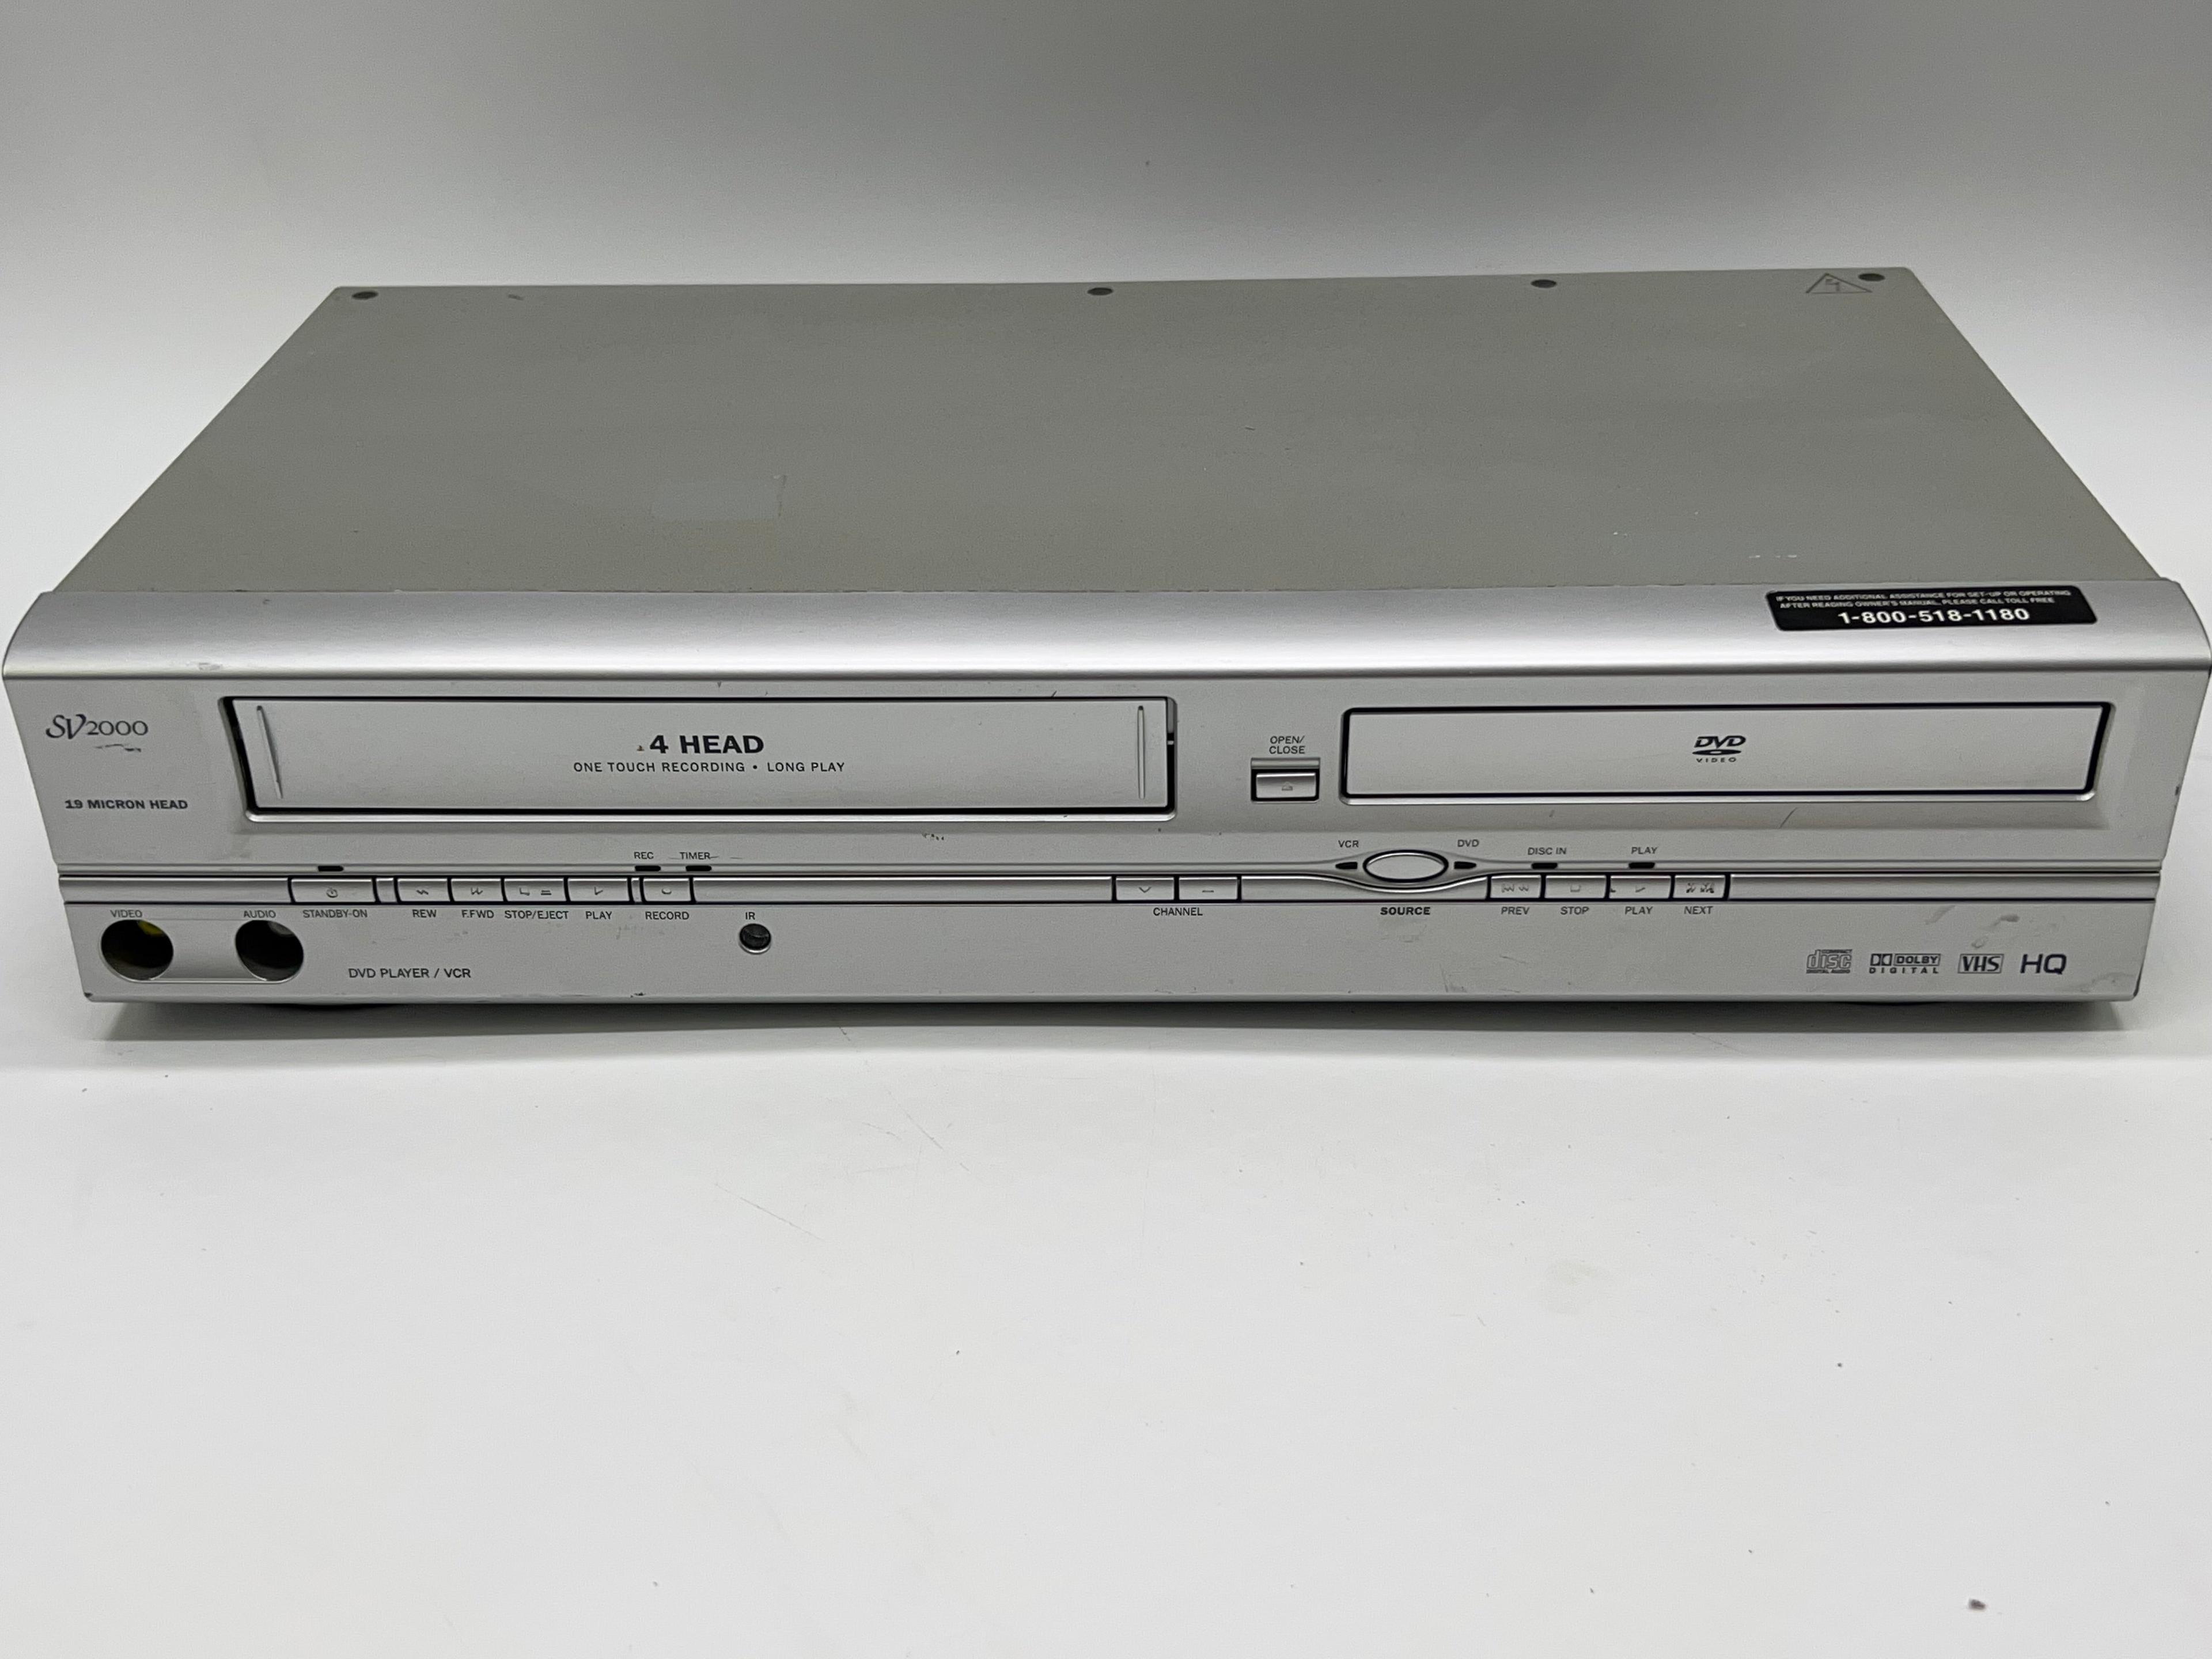 Alternate View 1 of SV2000 FUNAI WV806 DVD Player / VCR VHS Combo 4-Head Recorder No